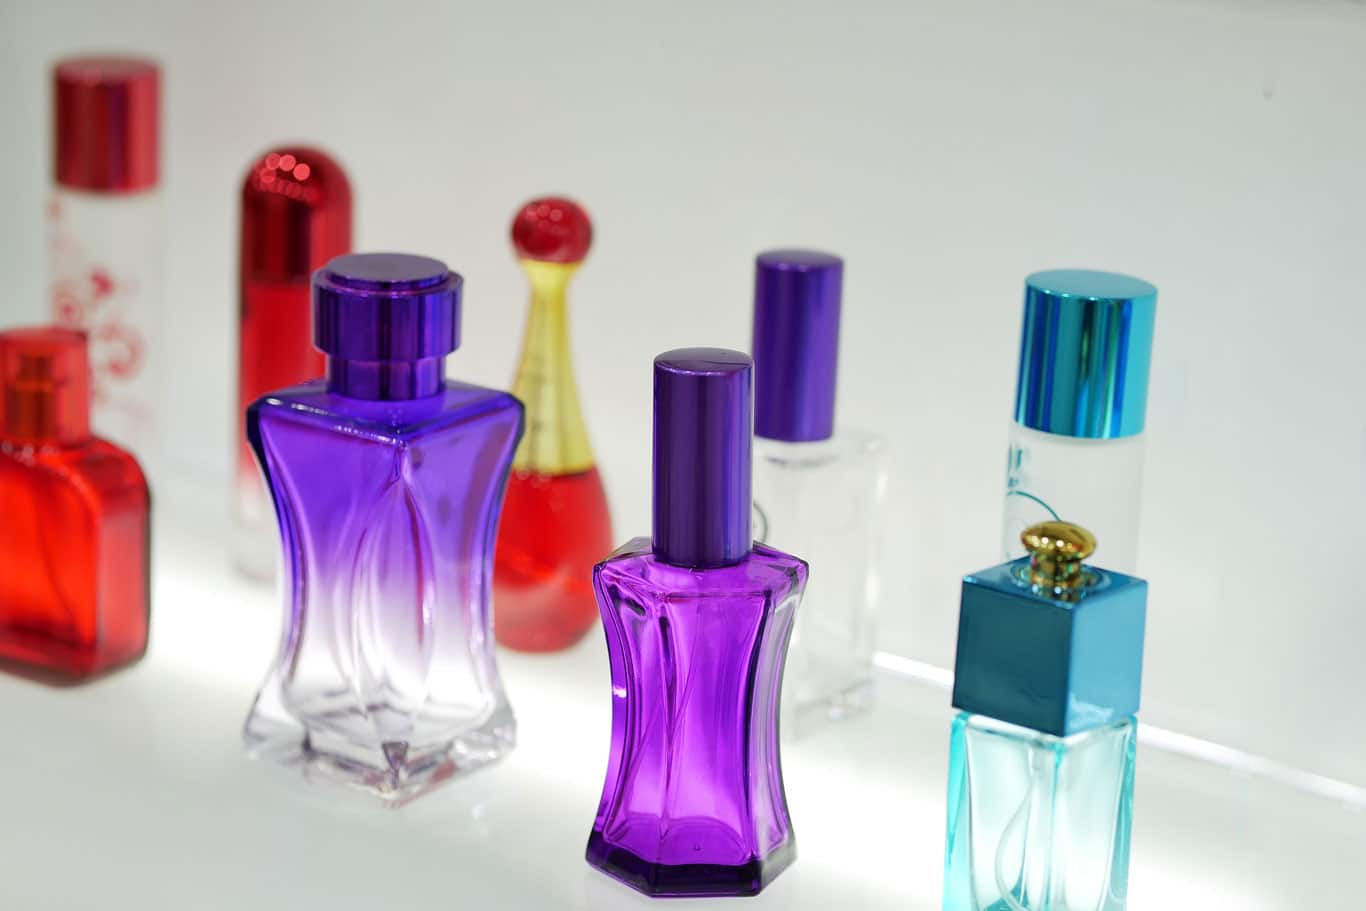 OK-multicolored-perfume-bottles-blurred-background